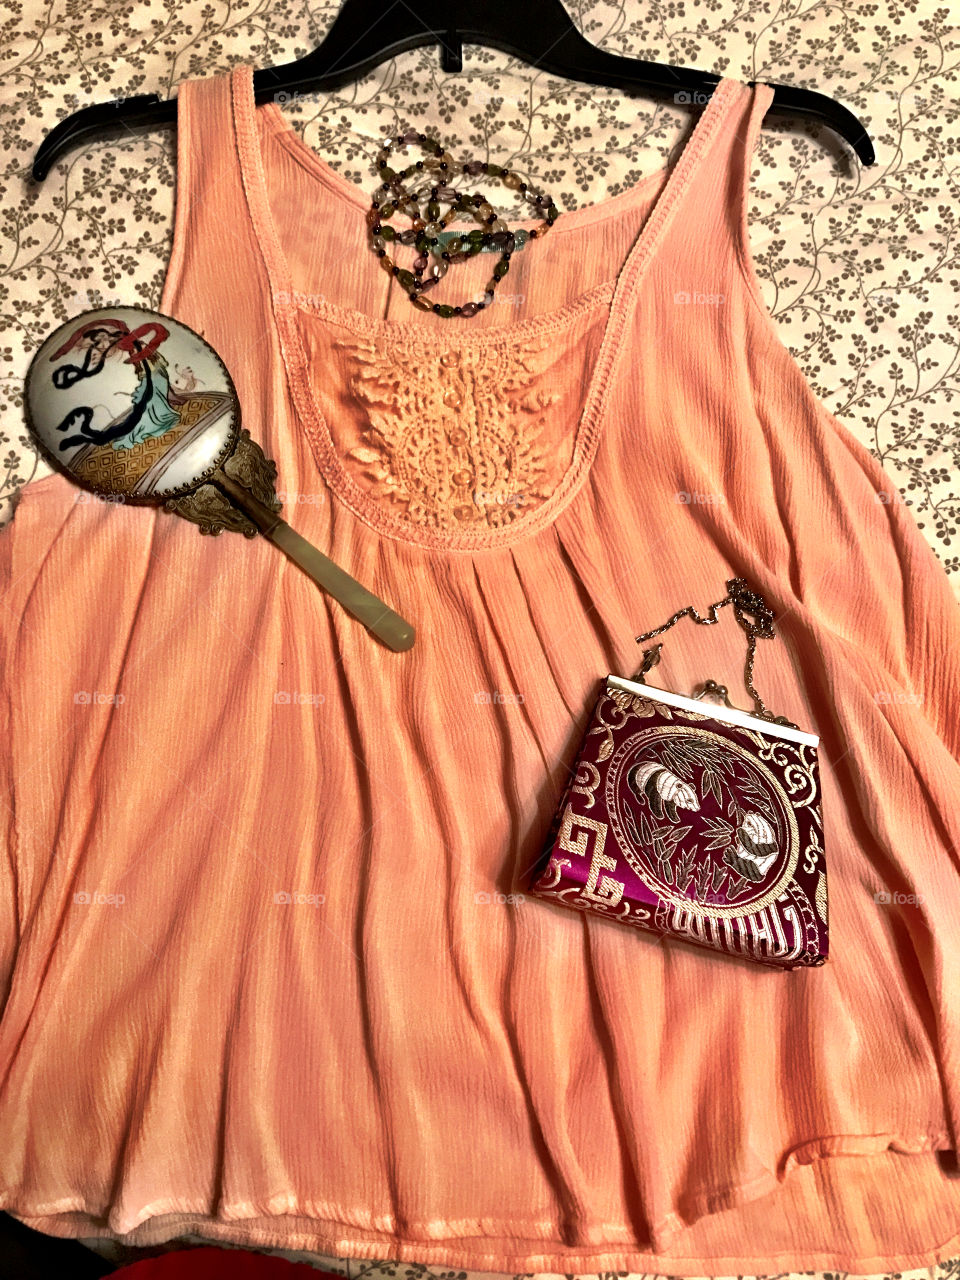 Favorite shirt, vintage mirror, and Panda purse